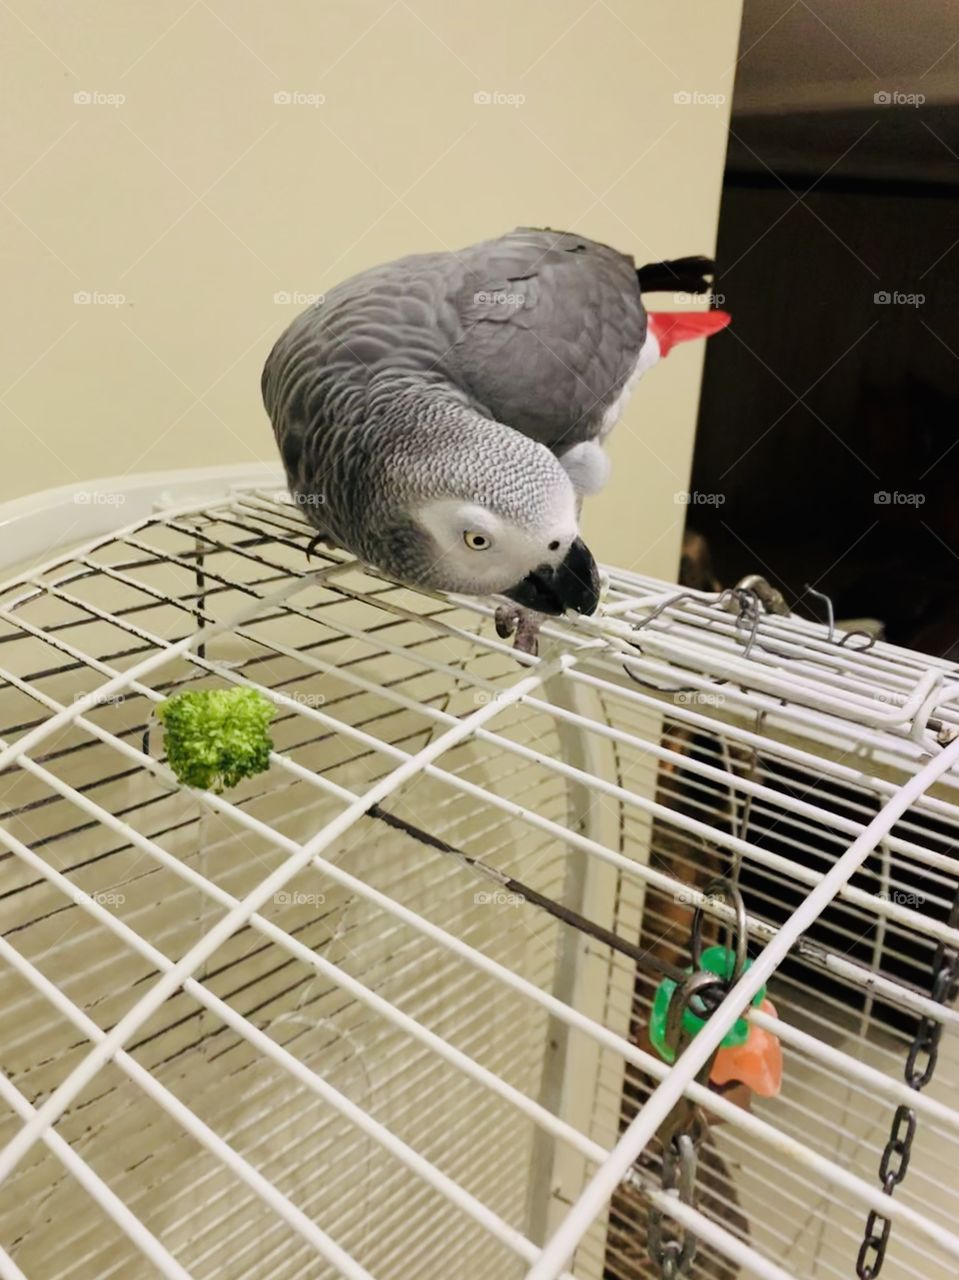 My sweetest little African Grey enjoying his broccoli 🥦